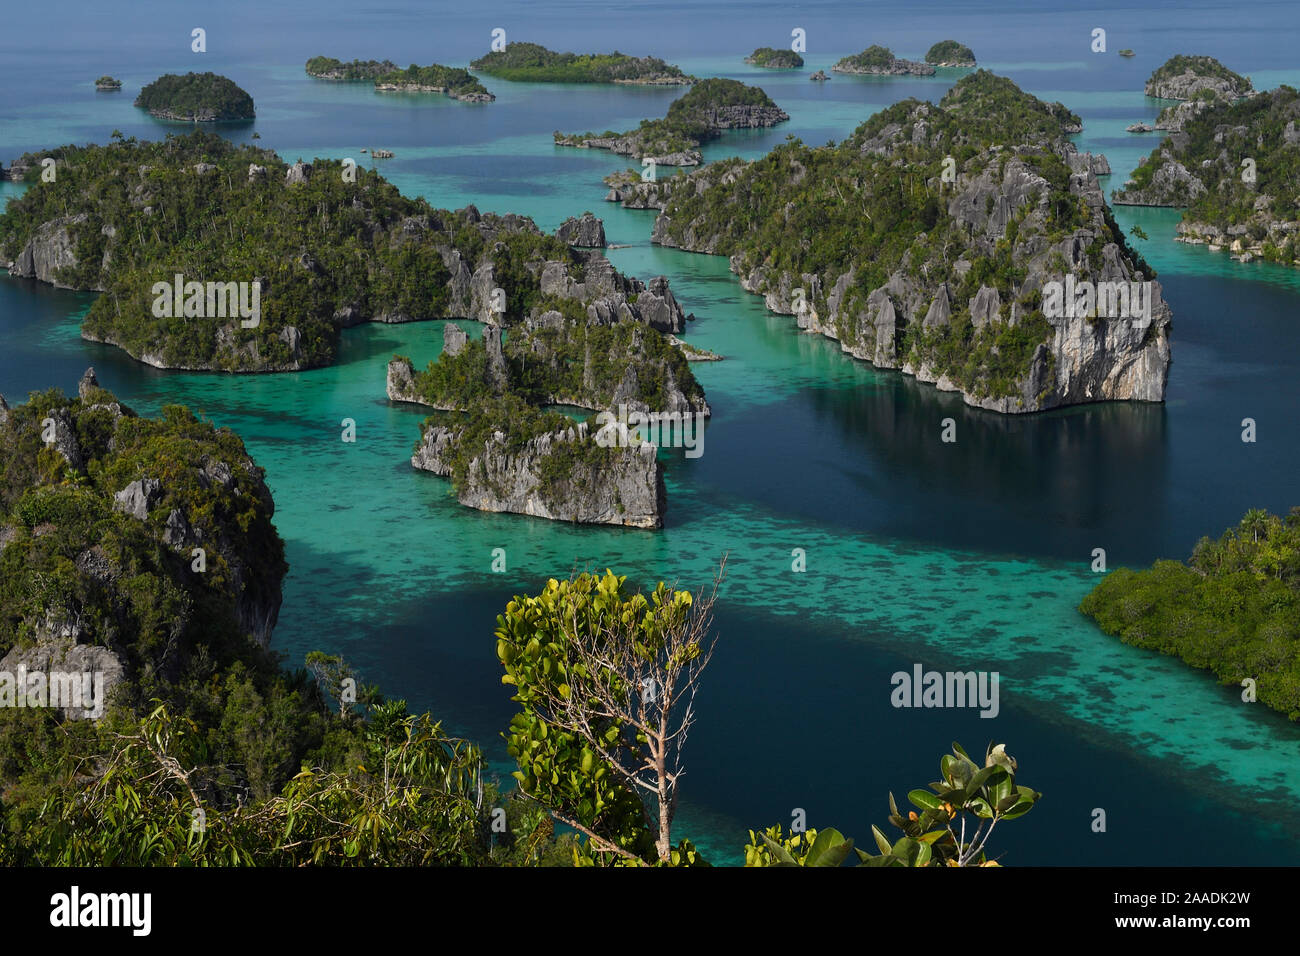 Karst Inseln im Archipel Misool, Raja Ampat, Papua Neuguinea, Indonesien. Dezember 2016. Stockfoto